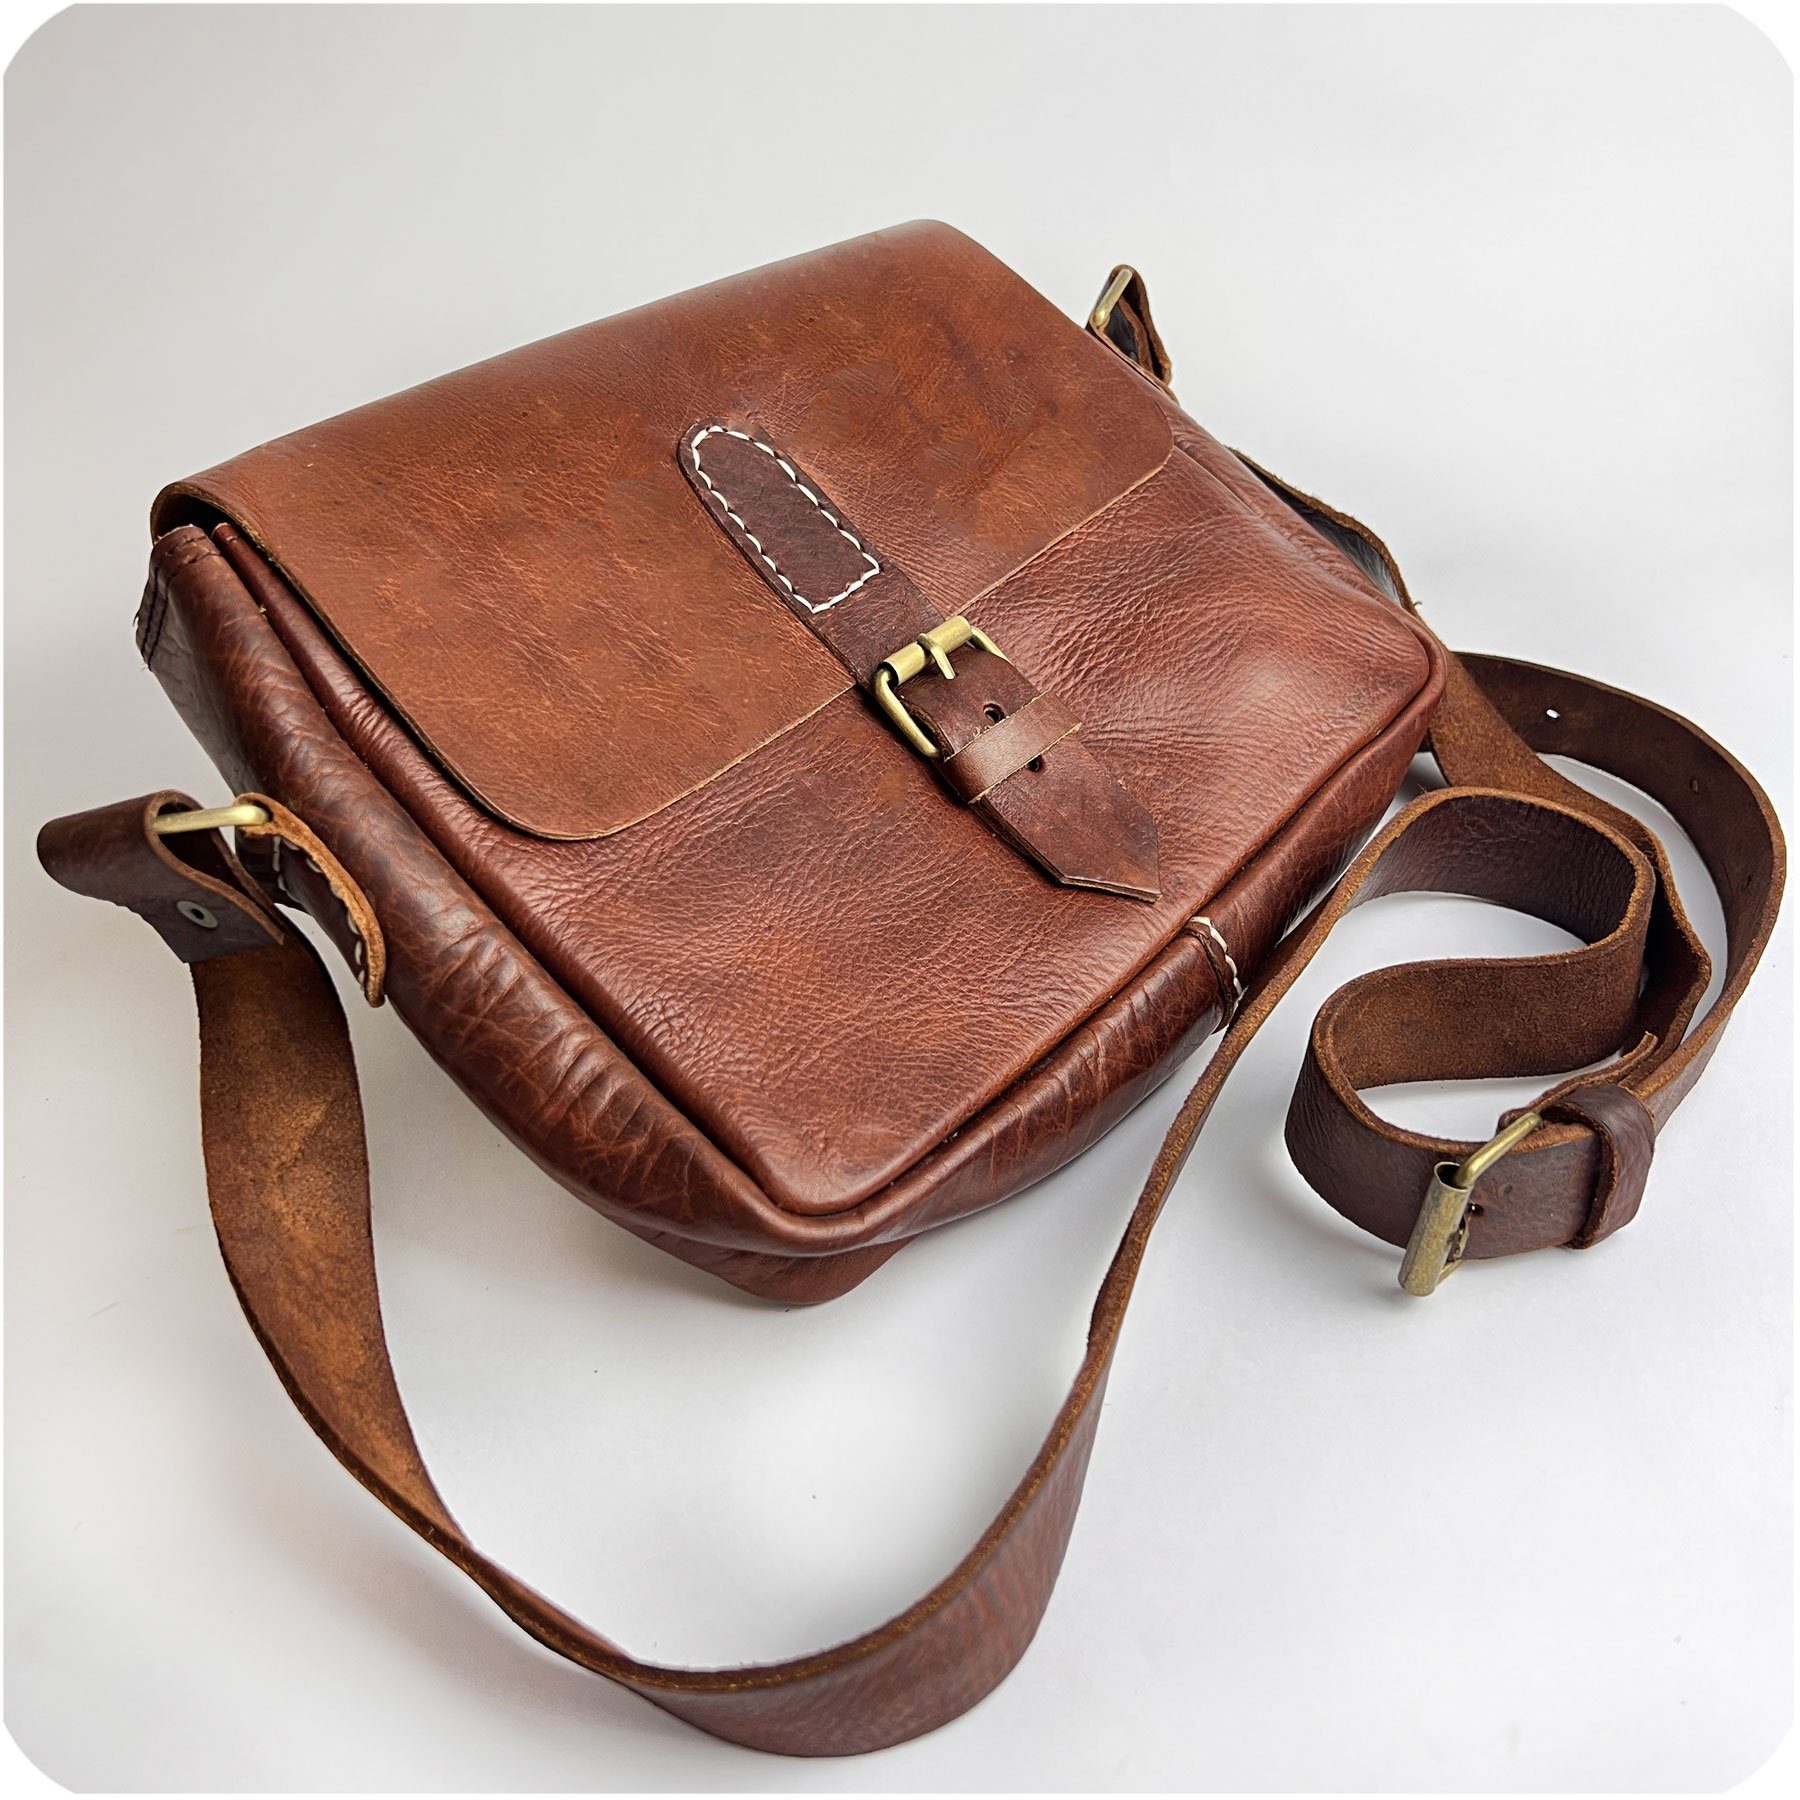 Noura marokkanische 20x23cm, Schultertasche Handtasche SIMANDRA elegante Leder-Handtasche Hellbraun